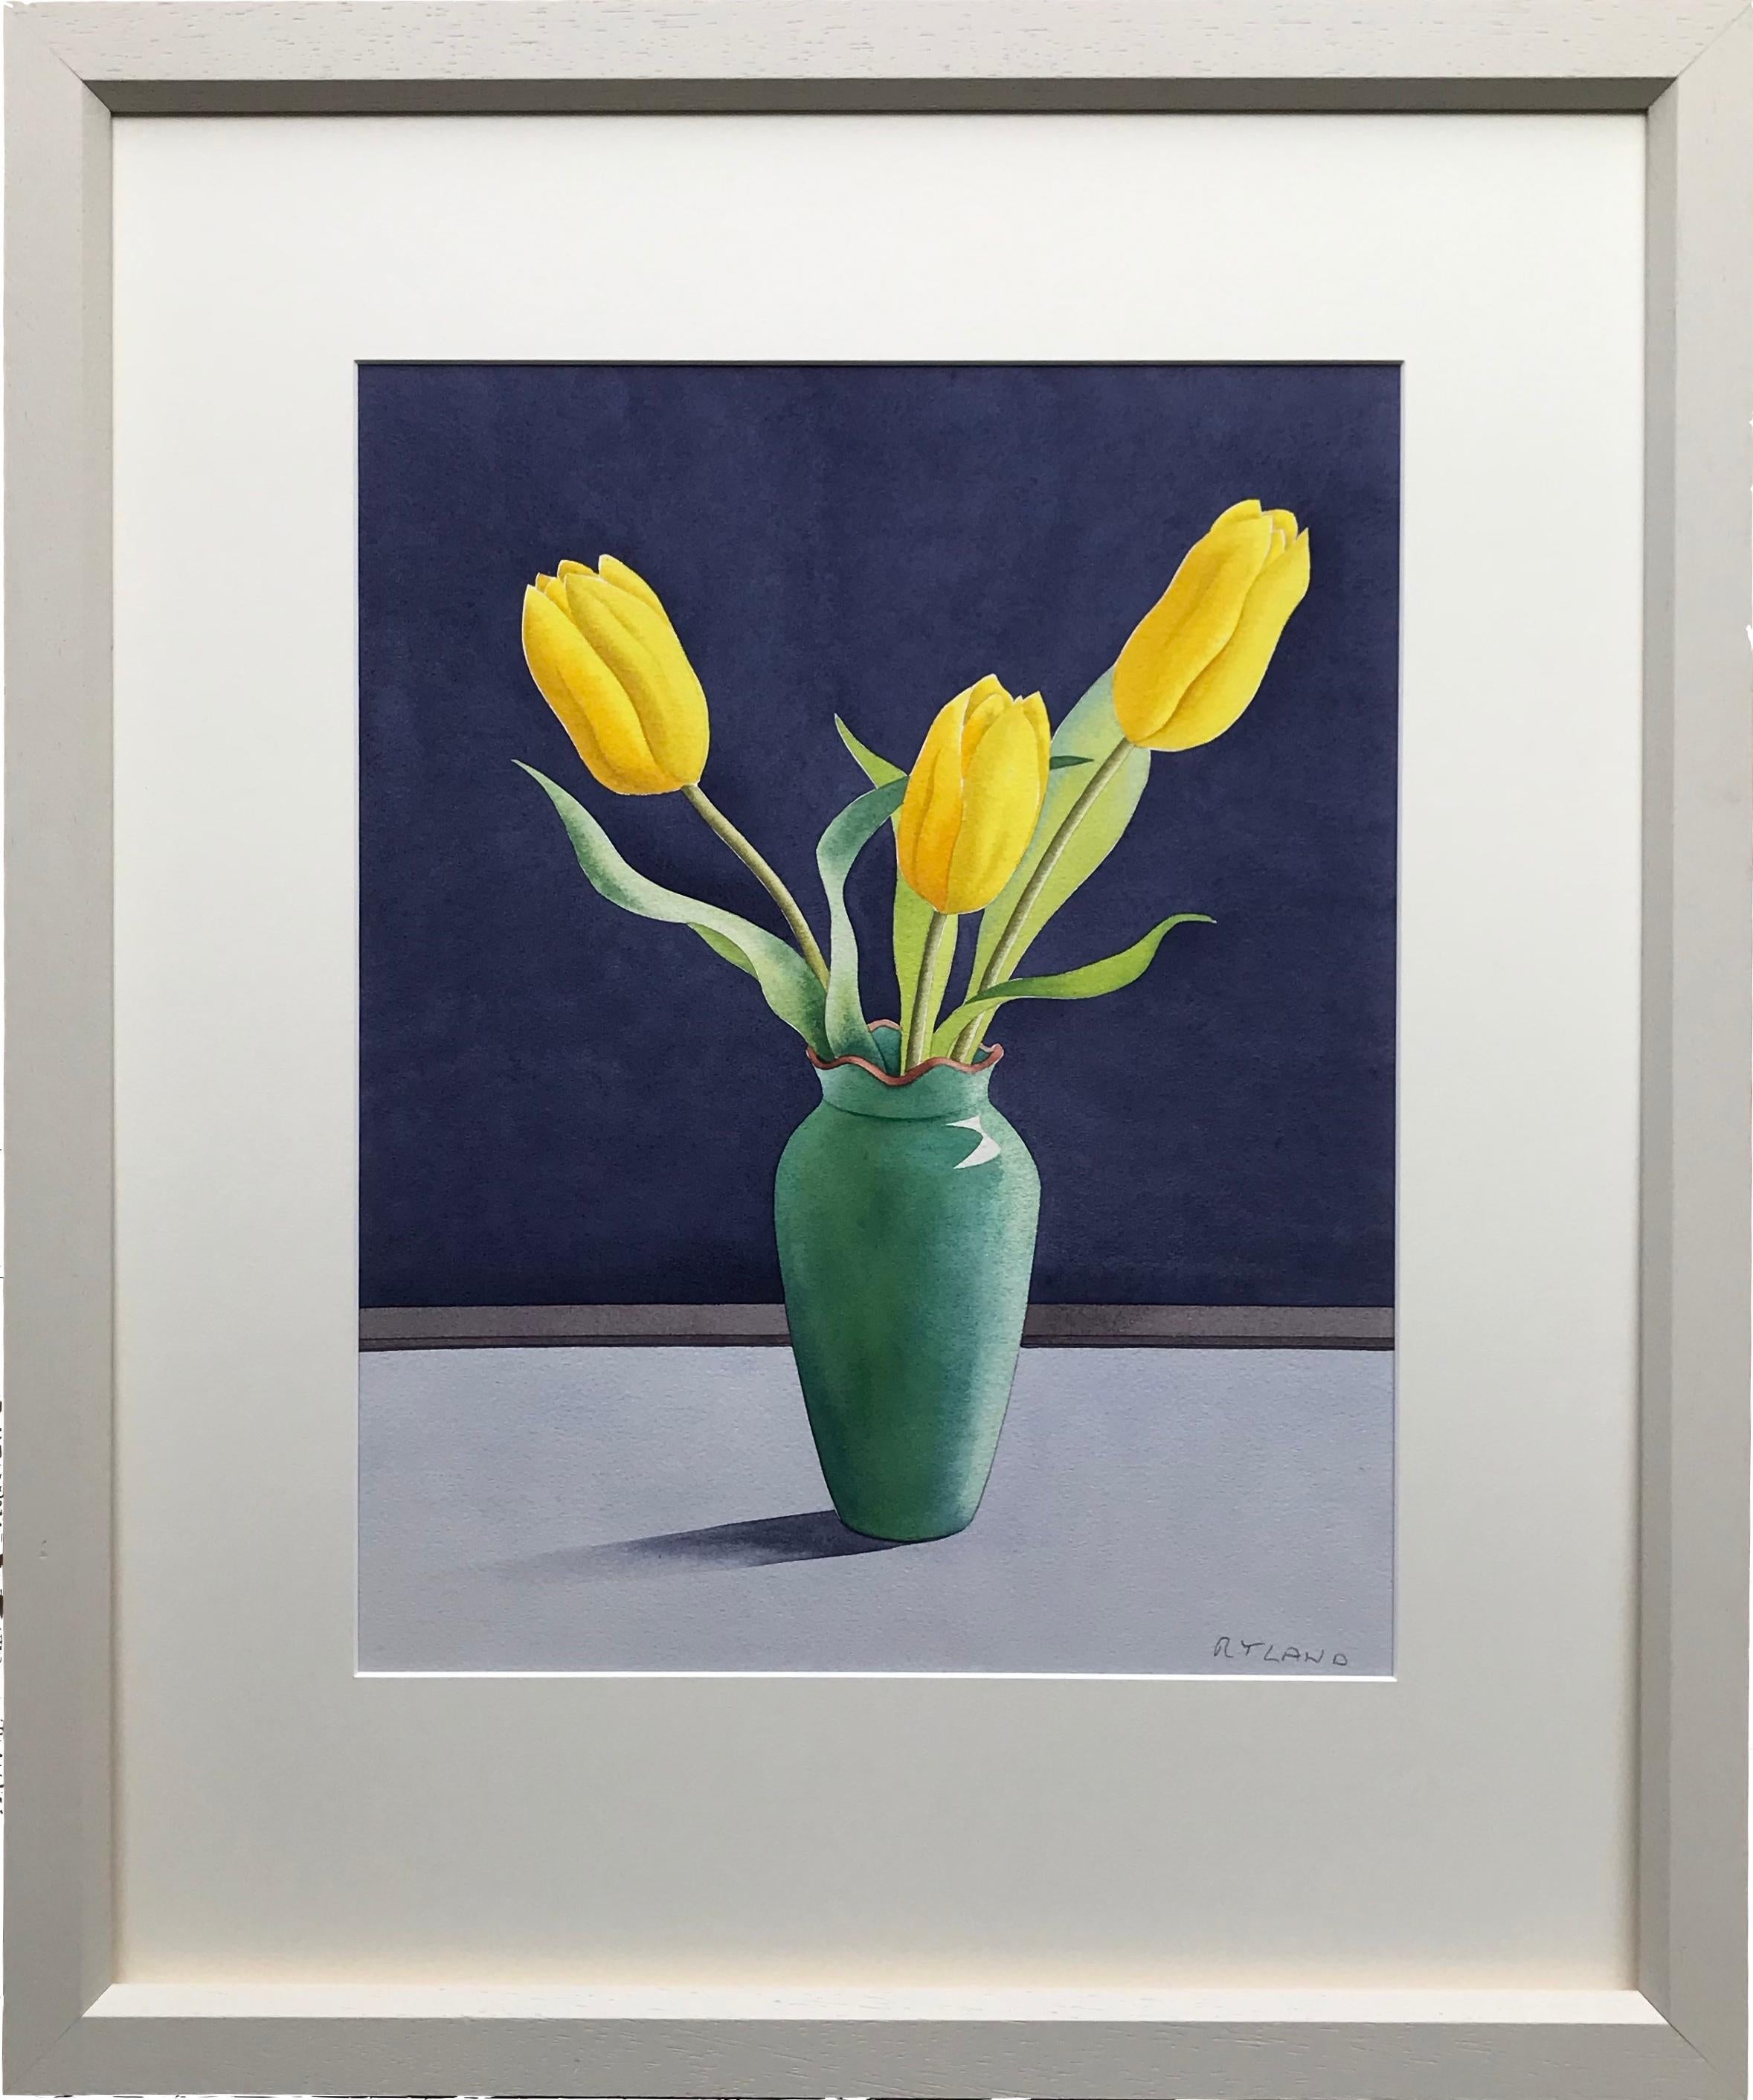 Christopher Ryland, Trois tulipes jaunes, nature morte, artiste contemporain